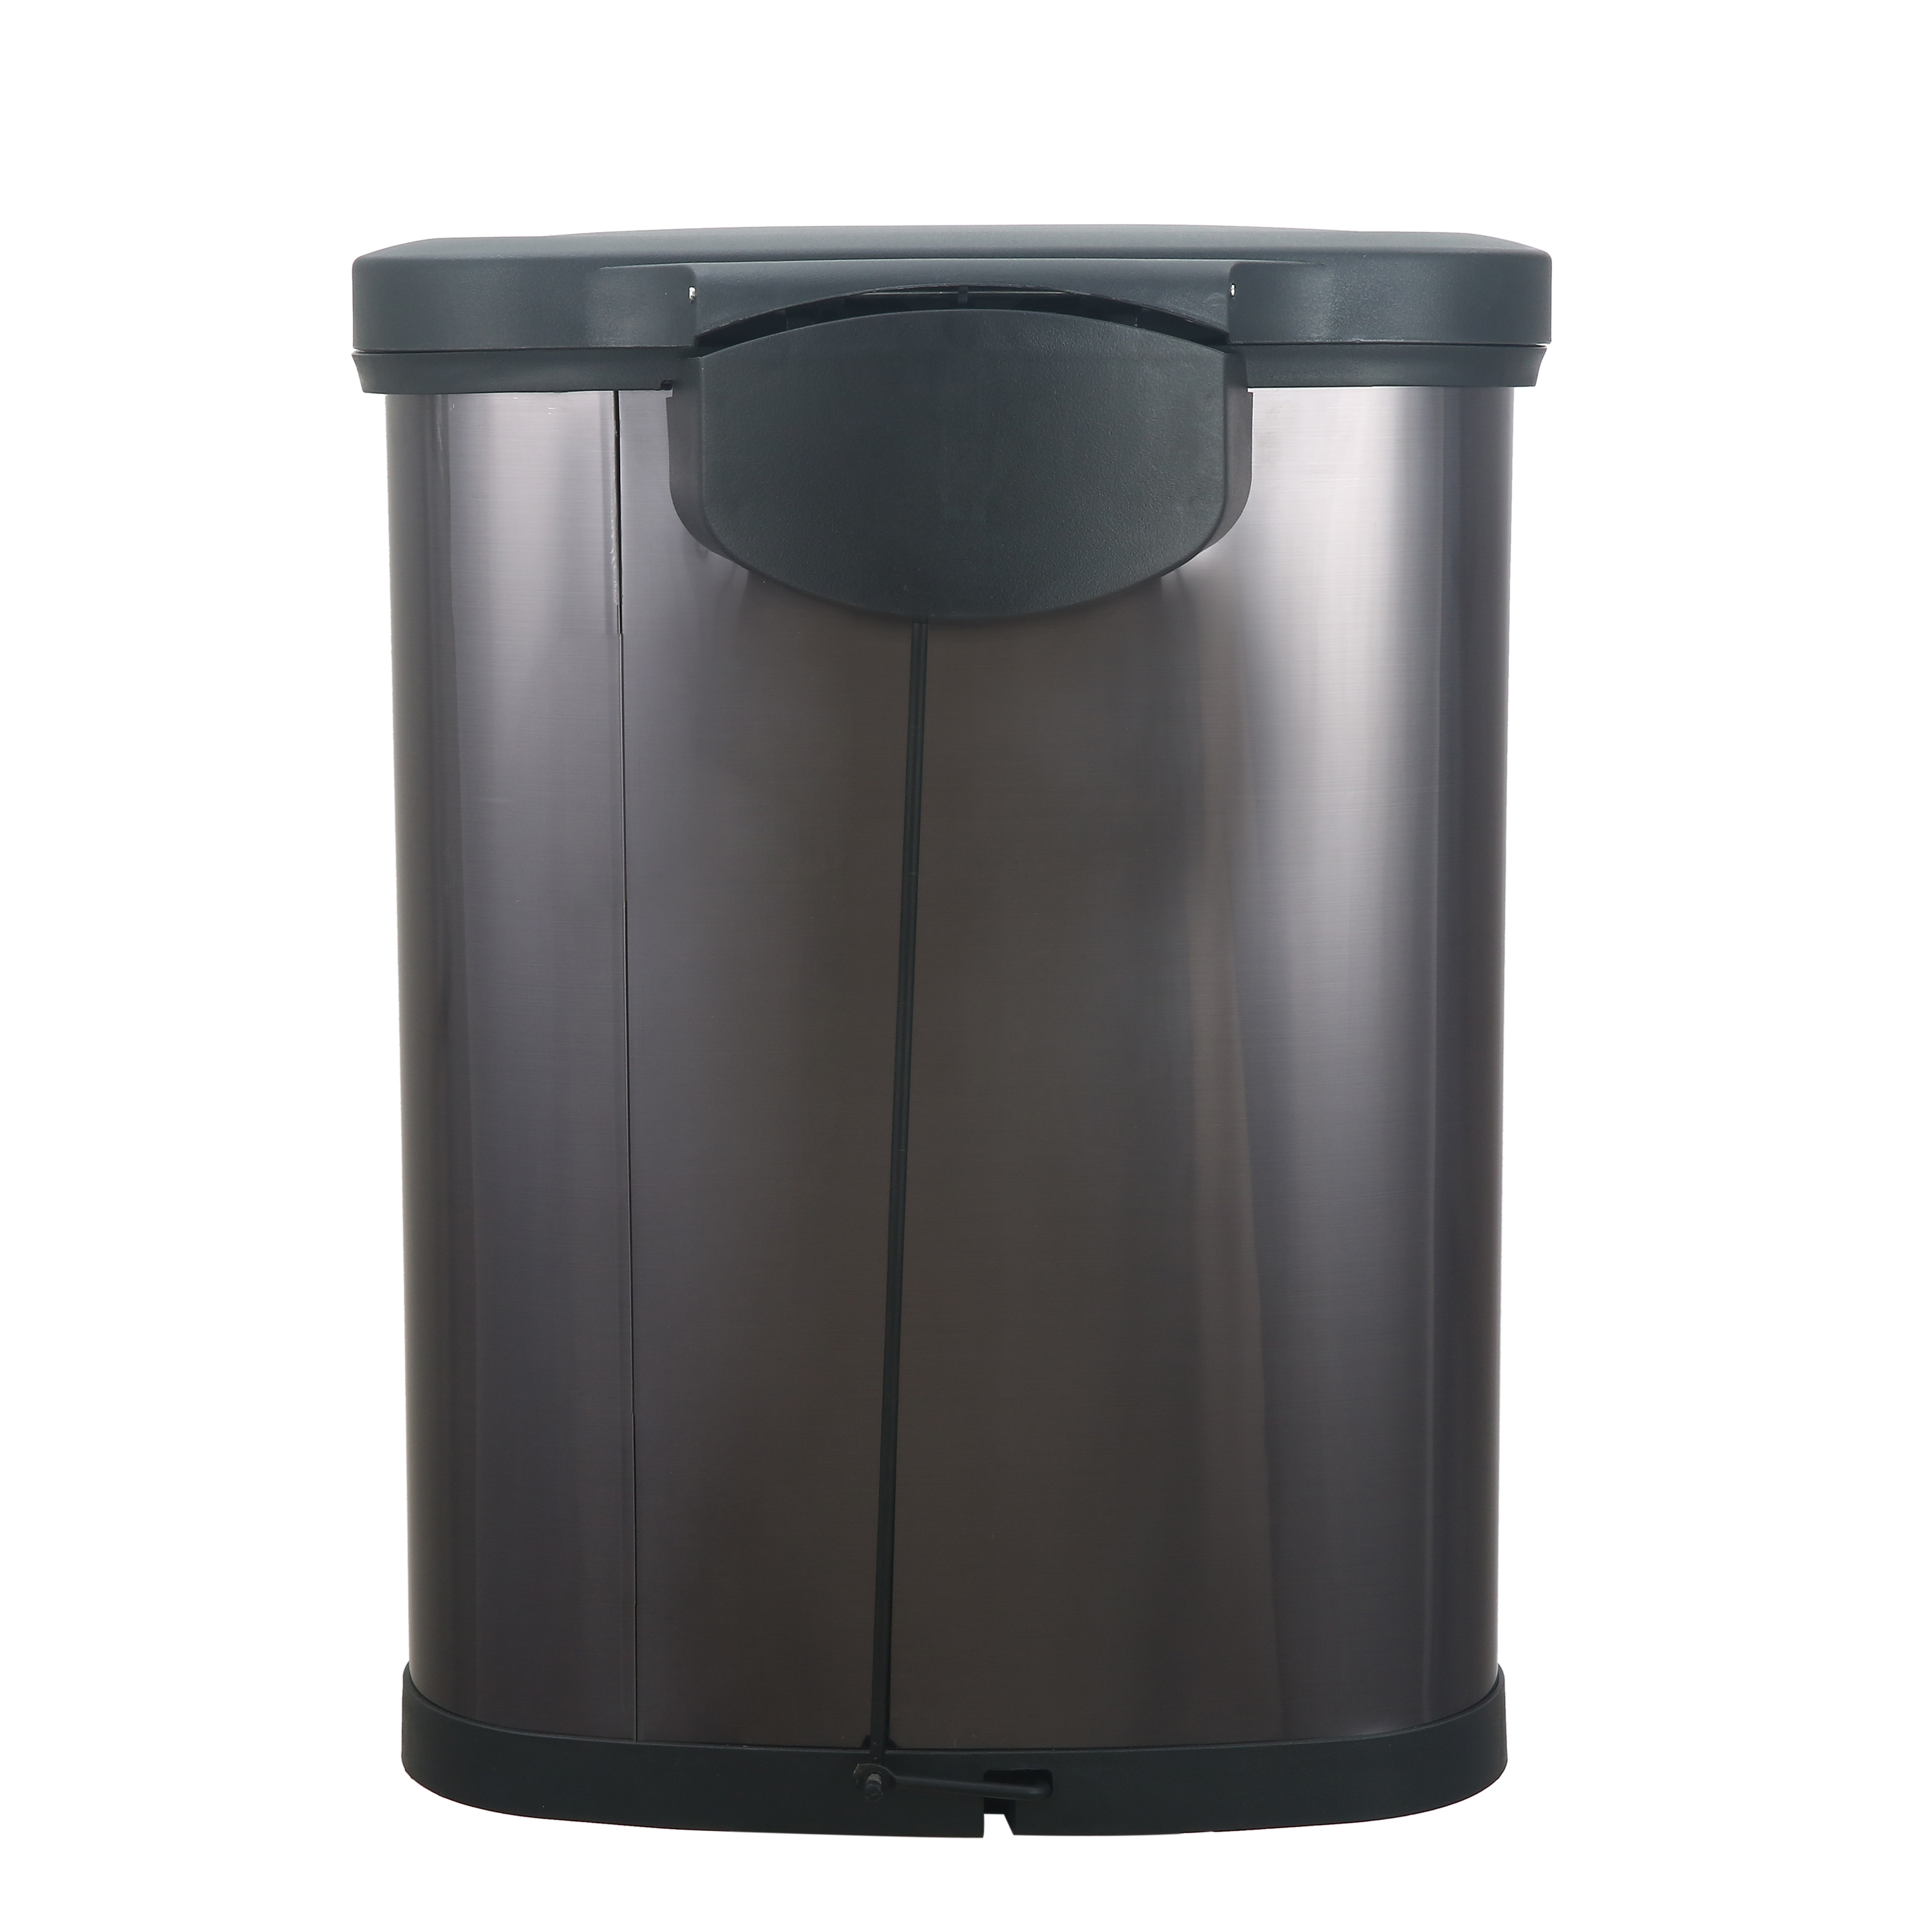 Mainstays 14.2 gal/54 Liter Black Stainless Steel Semi-Round Kitchen Garbage Can - image 2 of 5